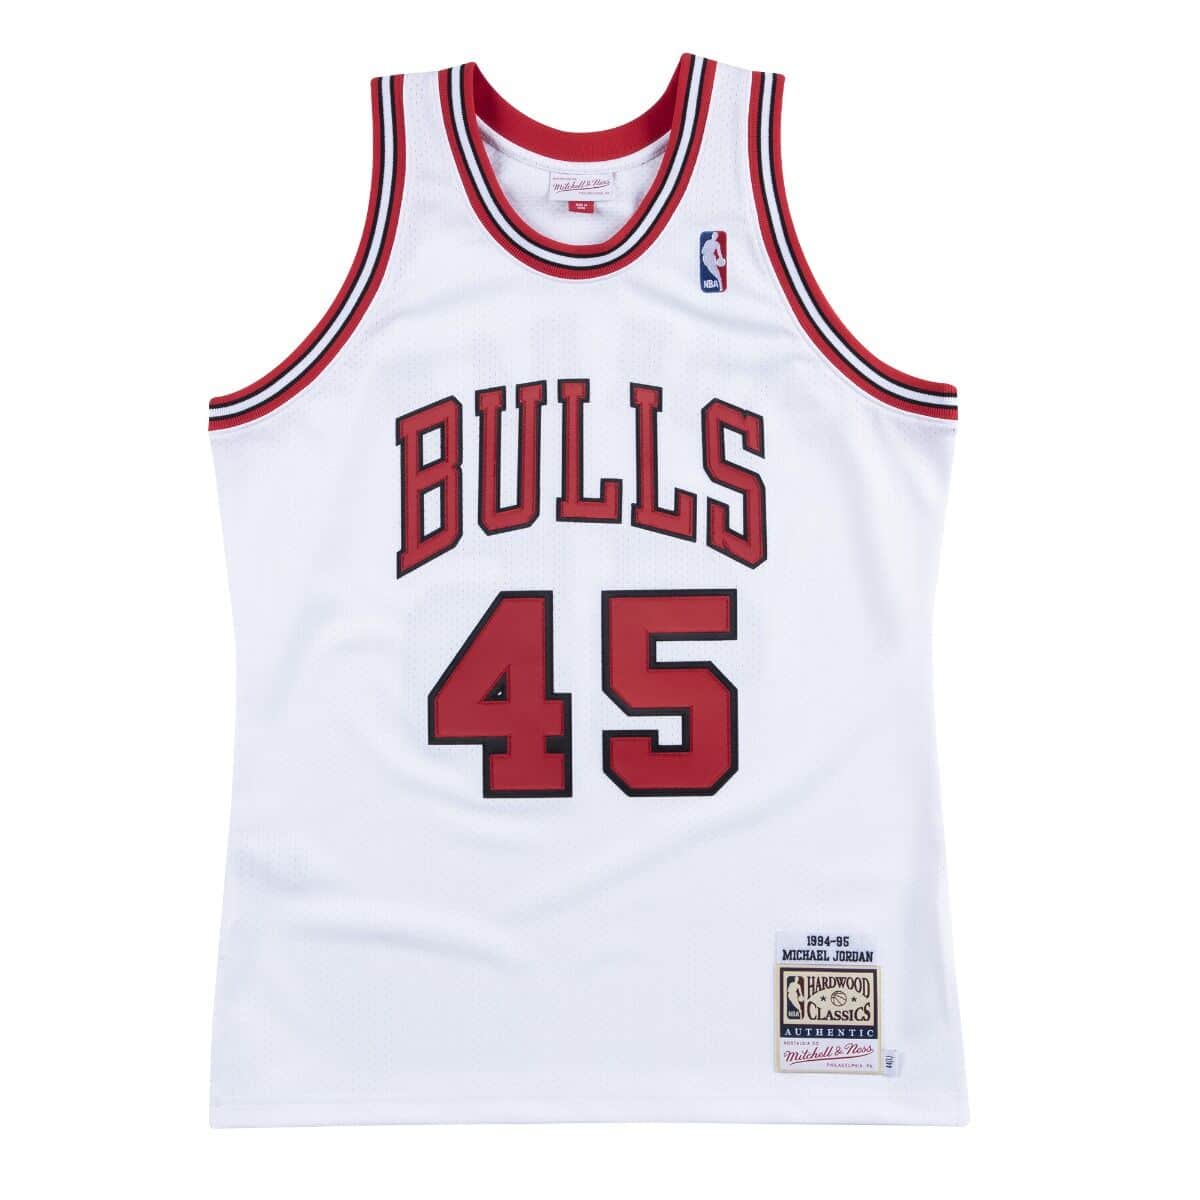 NBA Jersey - Nate Robinson (Chicago Bulls)